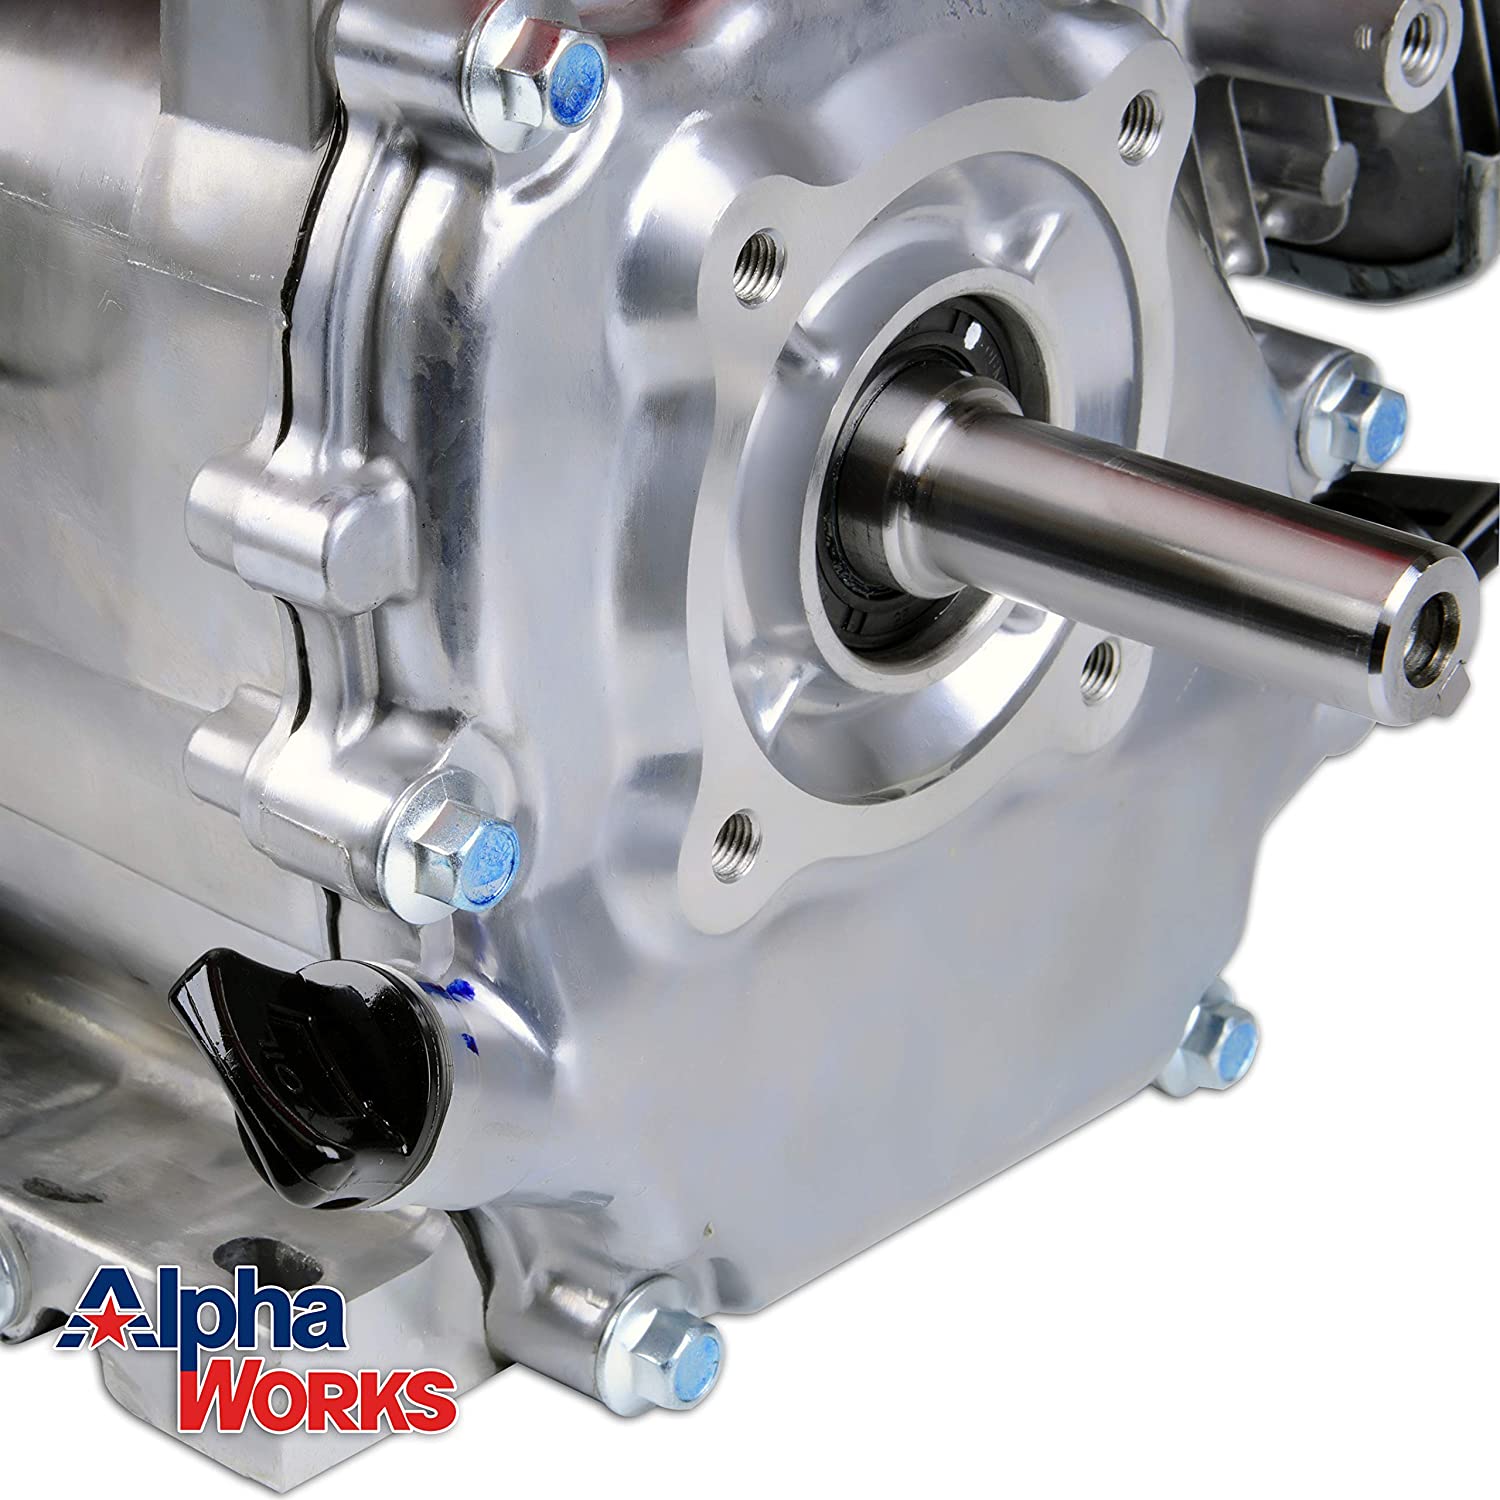 Alpha Works, Alpha Works GUT031 4 Stroke 7HP Recoil Start 3600RPM Horizontal Motor Gas Engine New